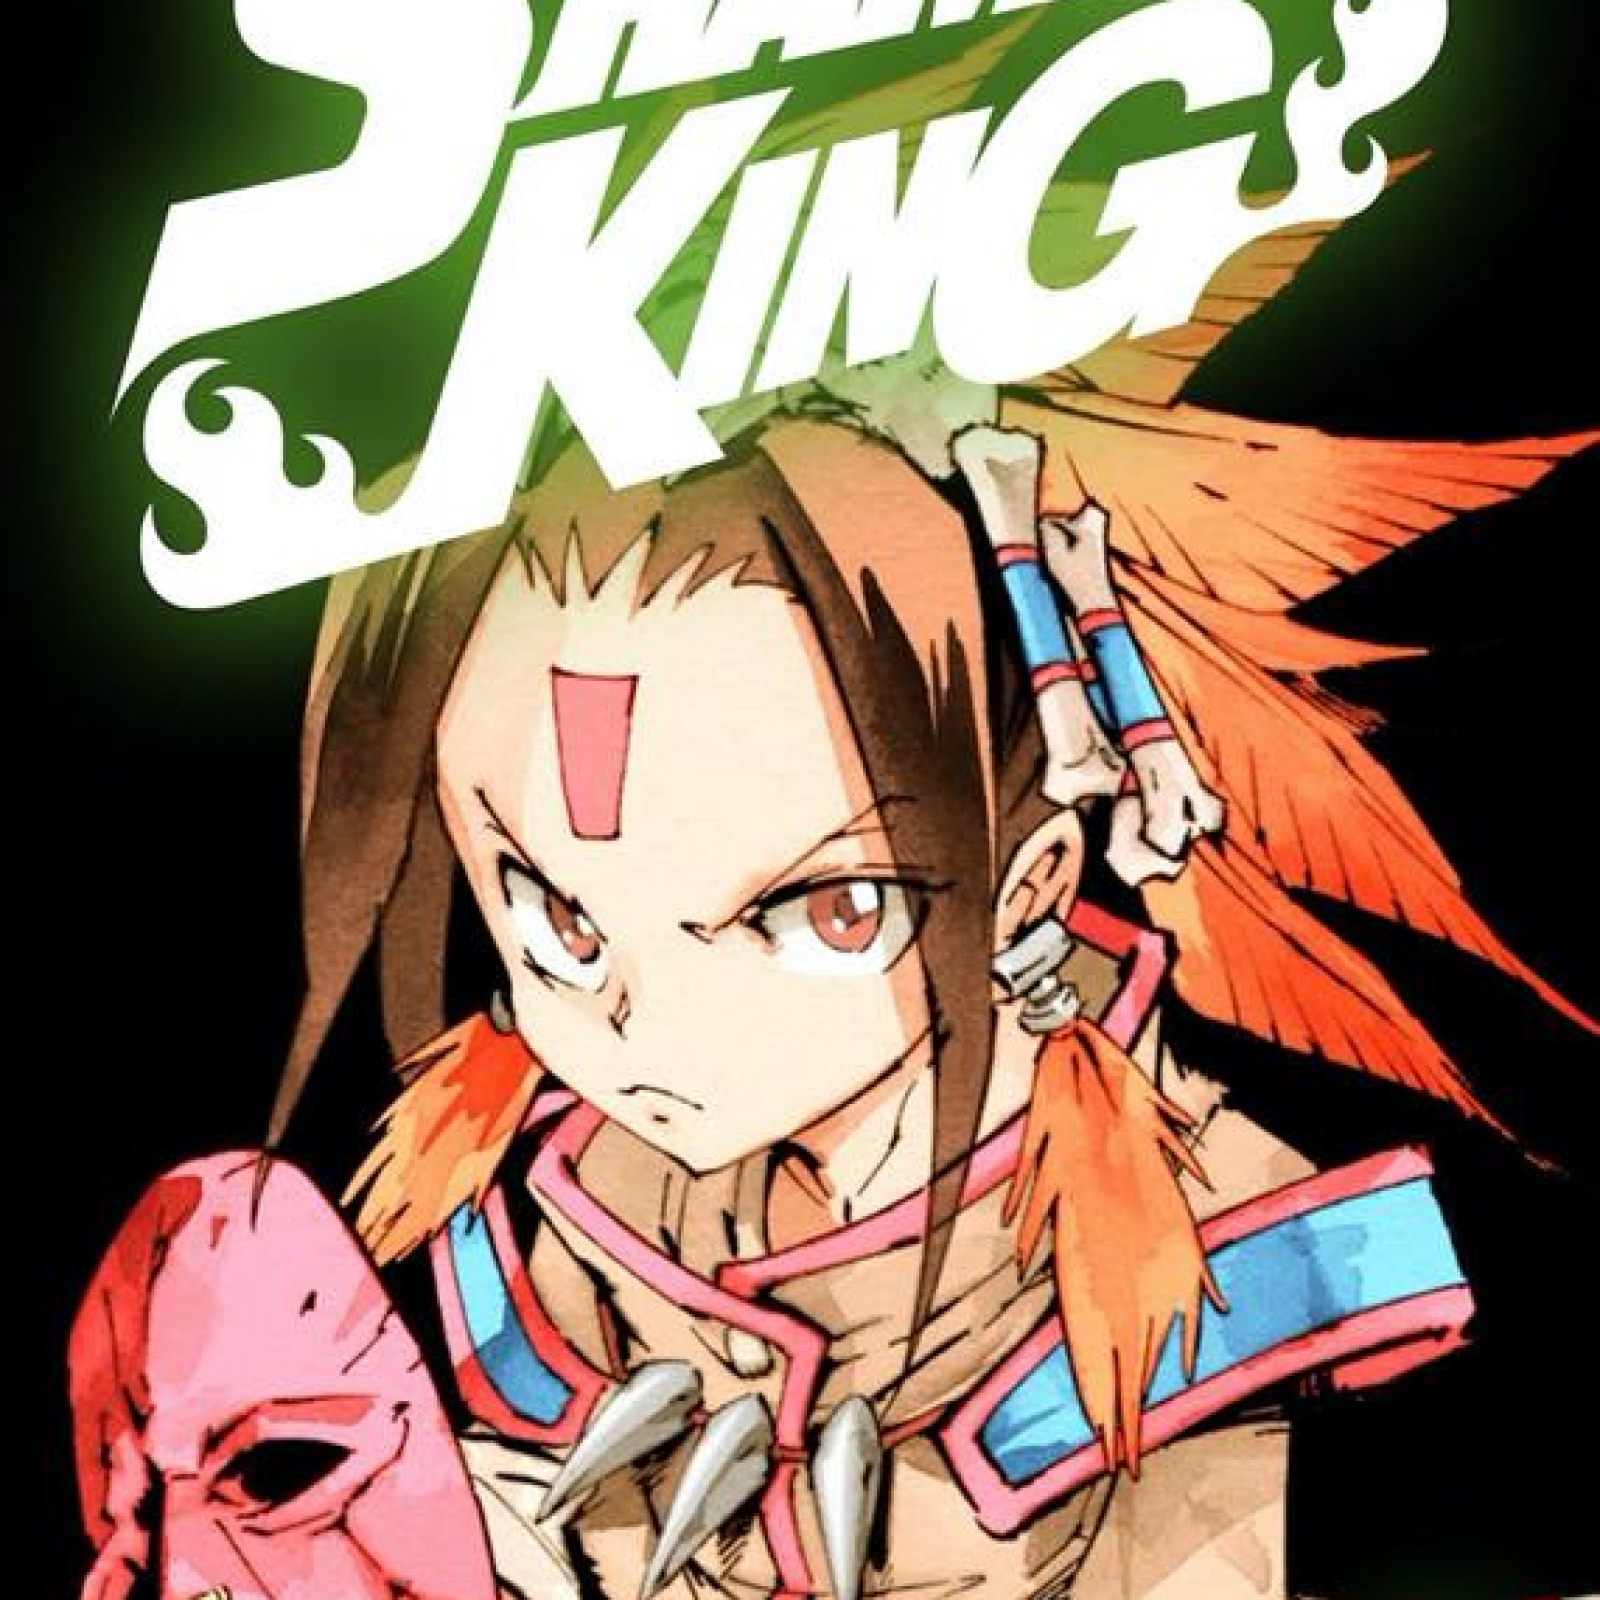 Shaman King Anime Original Soundtrack Now Available Digitally